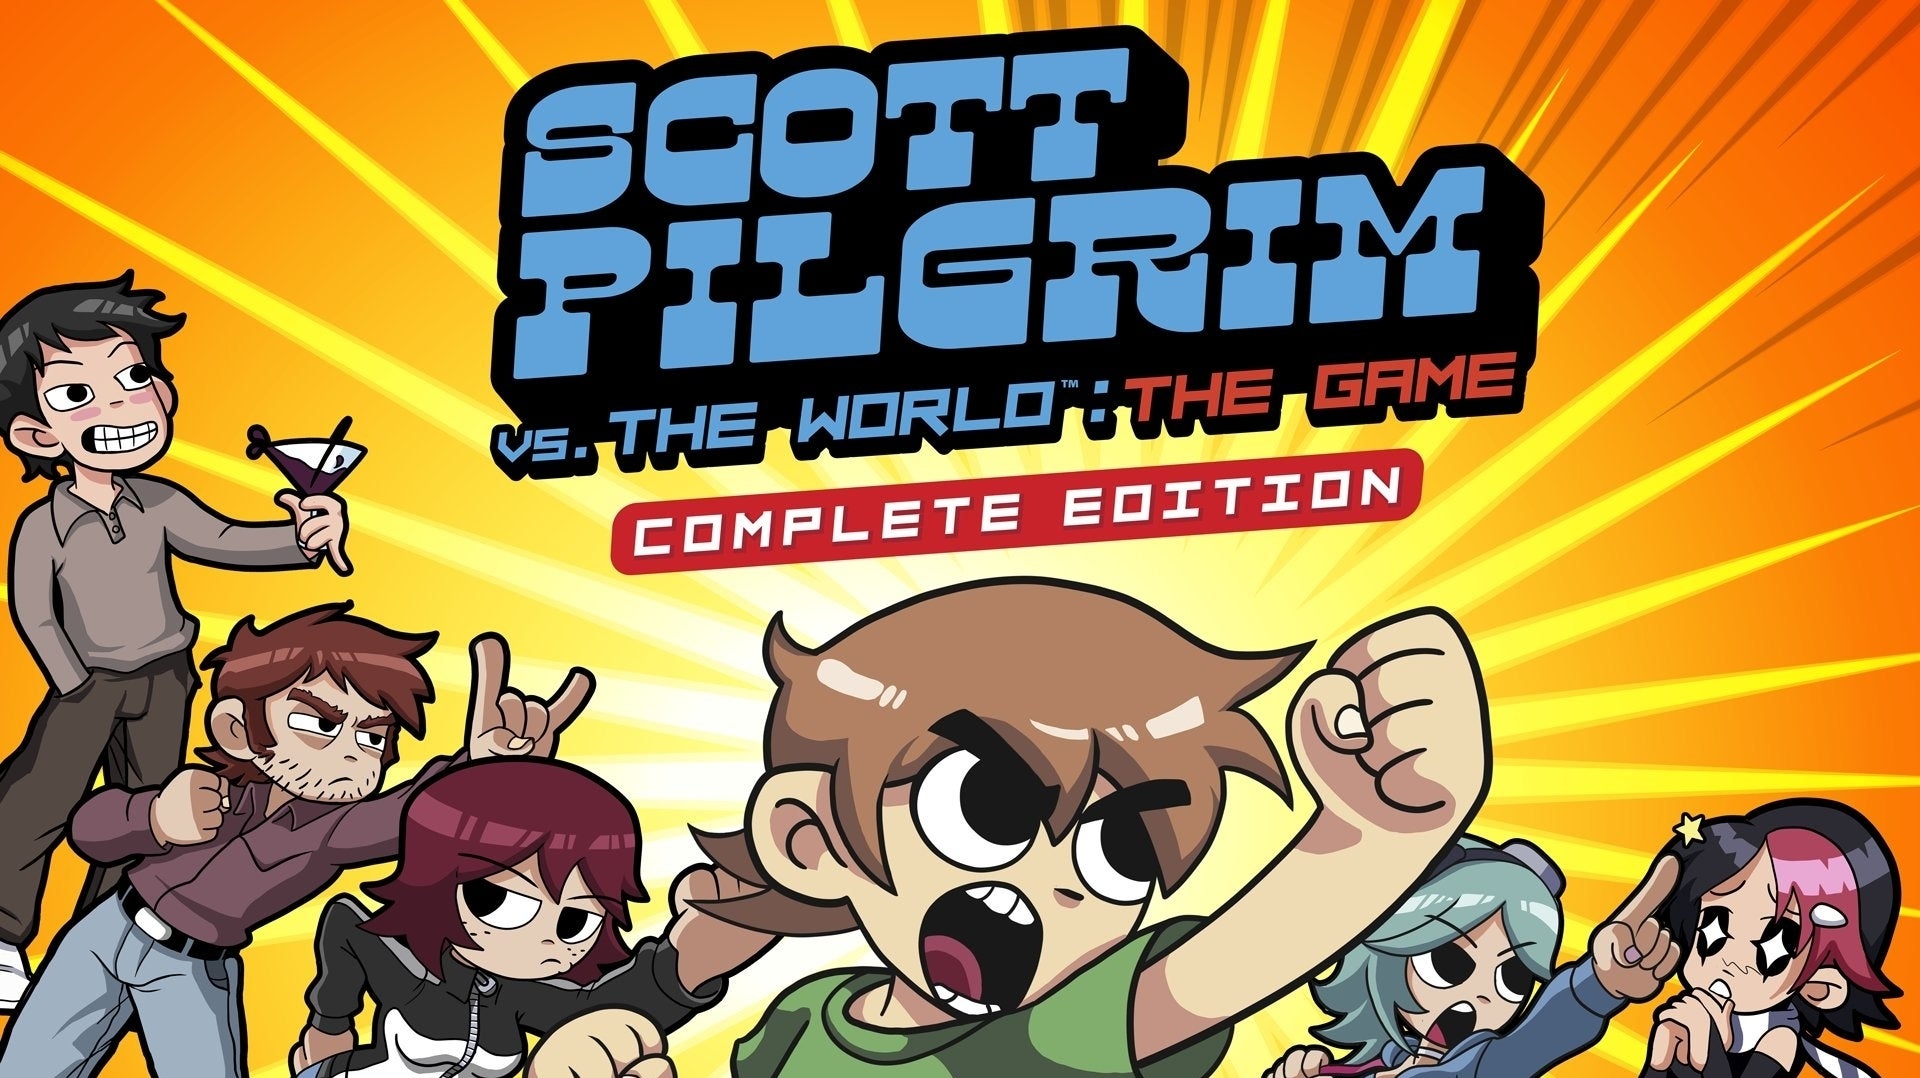 Imagen para Scott Pilgrim vs the World: The Game - Complete Edition saldrá a finales de año